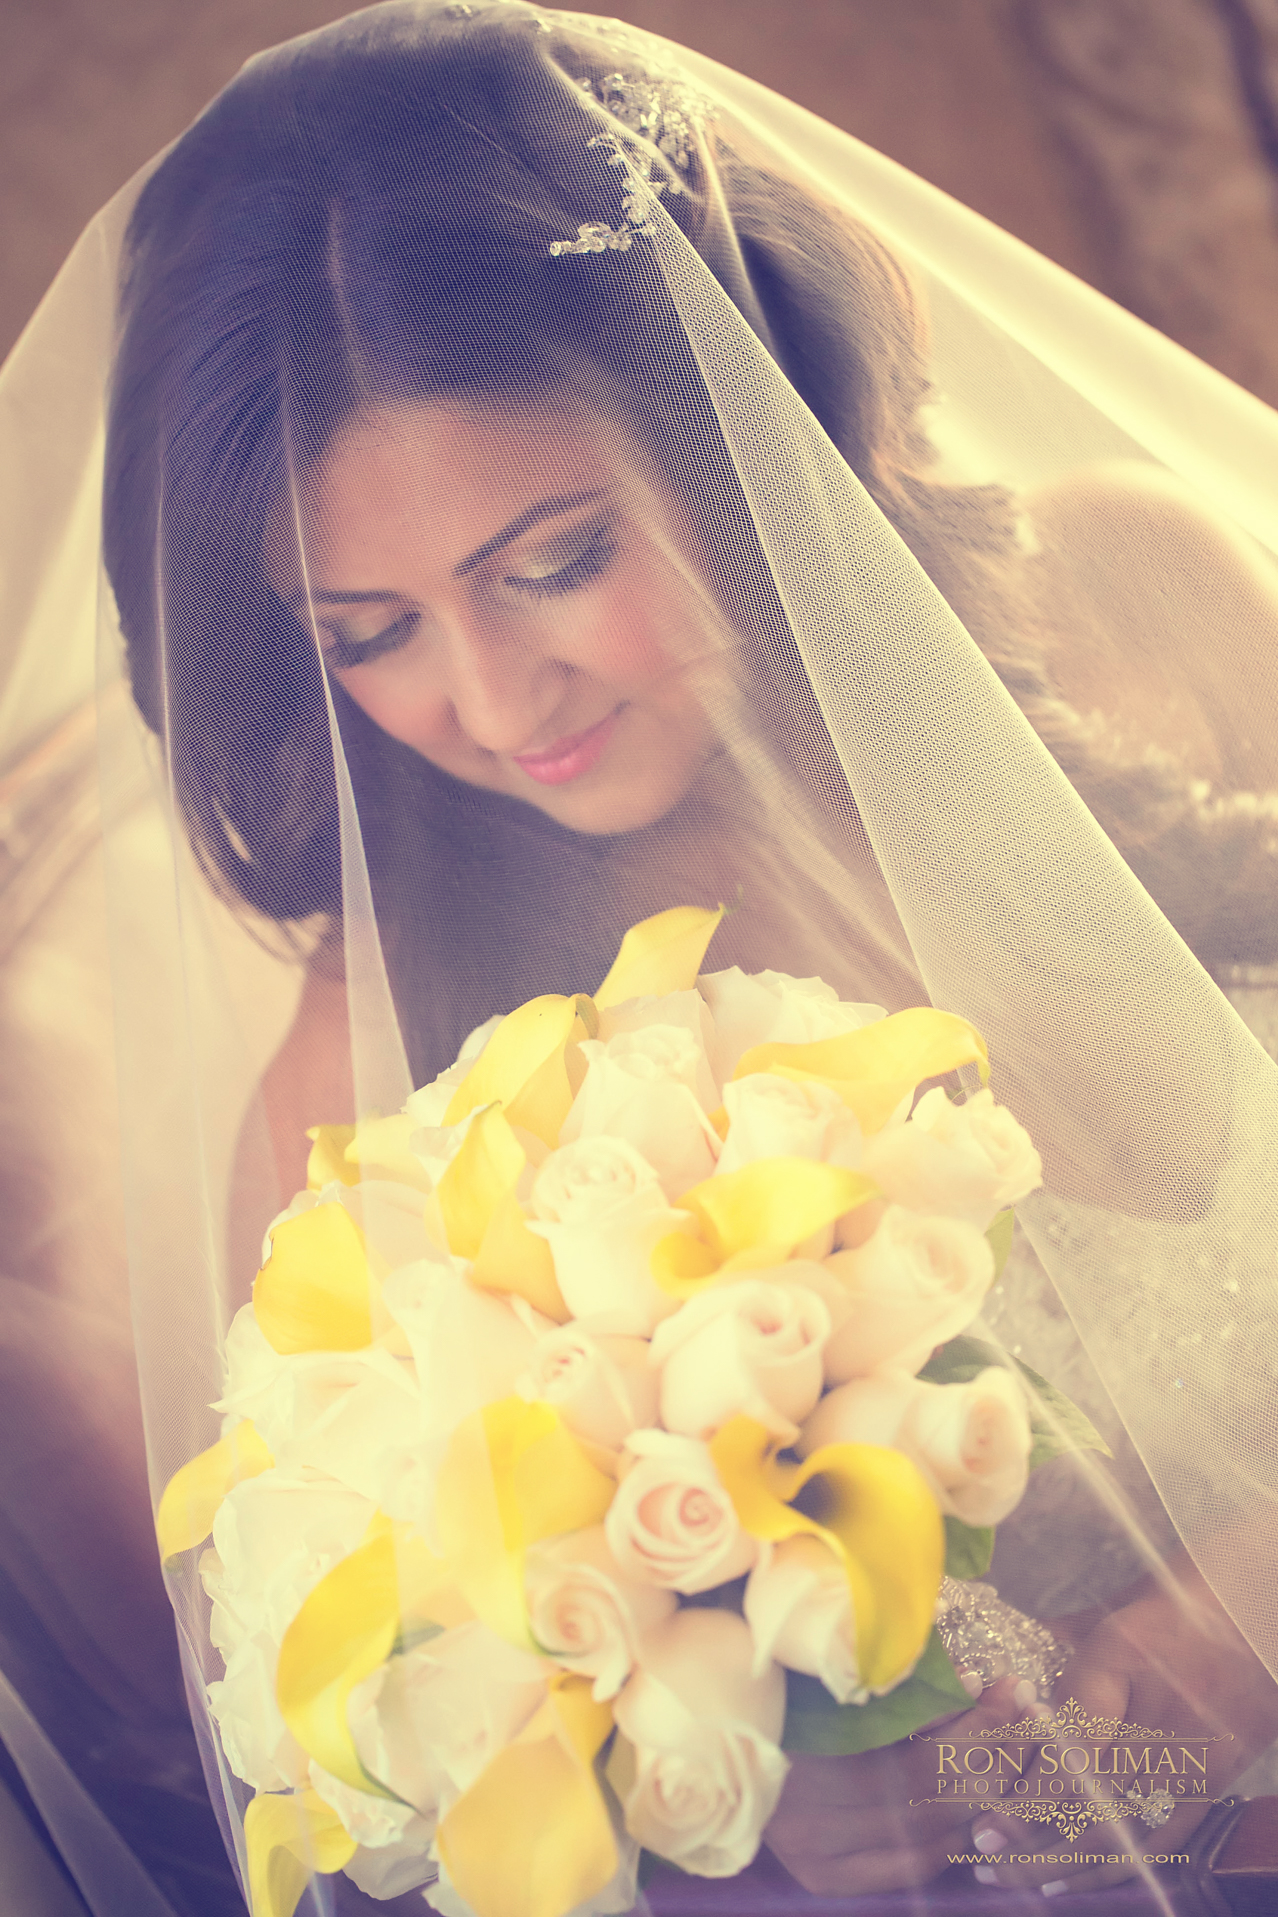 Yellow wedding bouquet